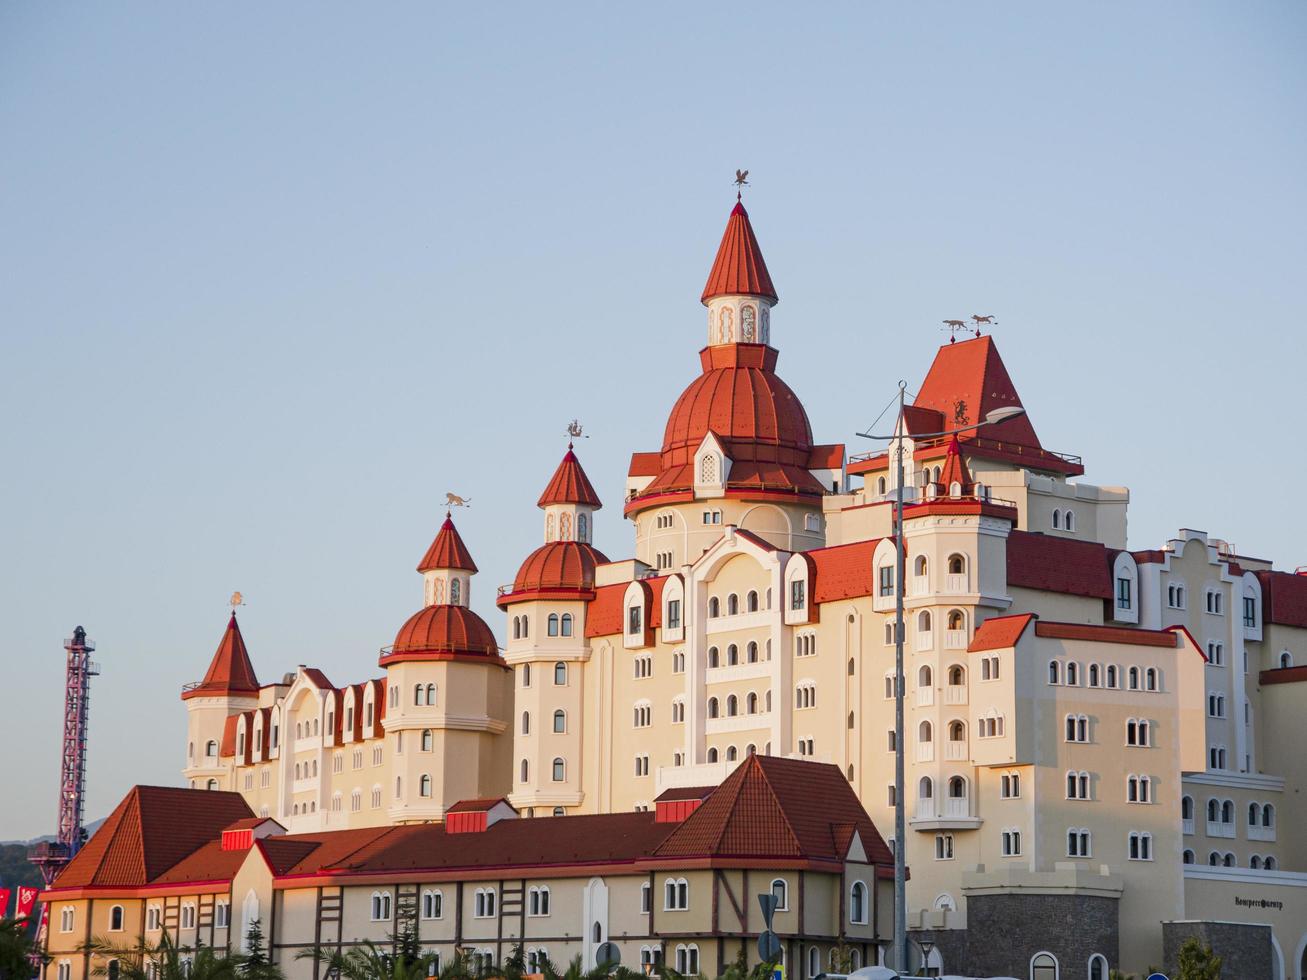 adler, russland - august 2019 - hotel bogatyr in adler city foto